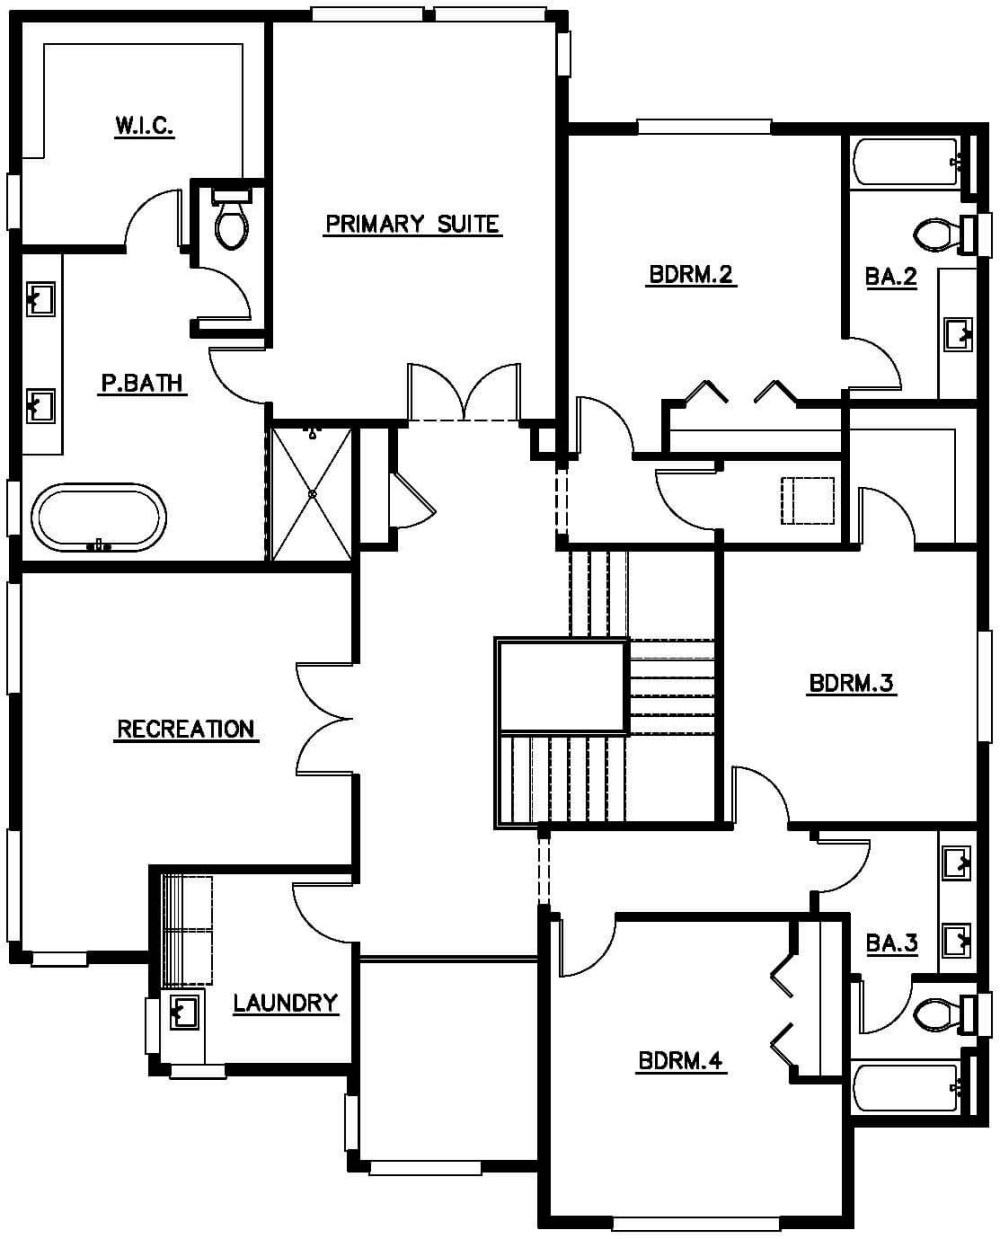 Upper Floor floorplan for the Eveleigh - Lot 7 home